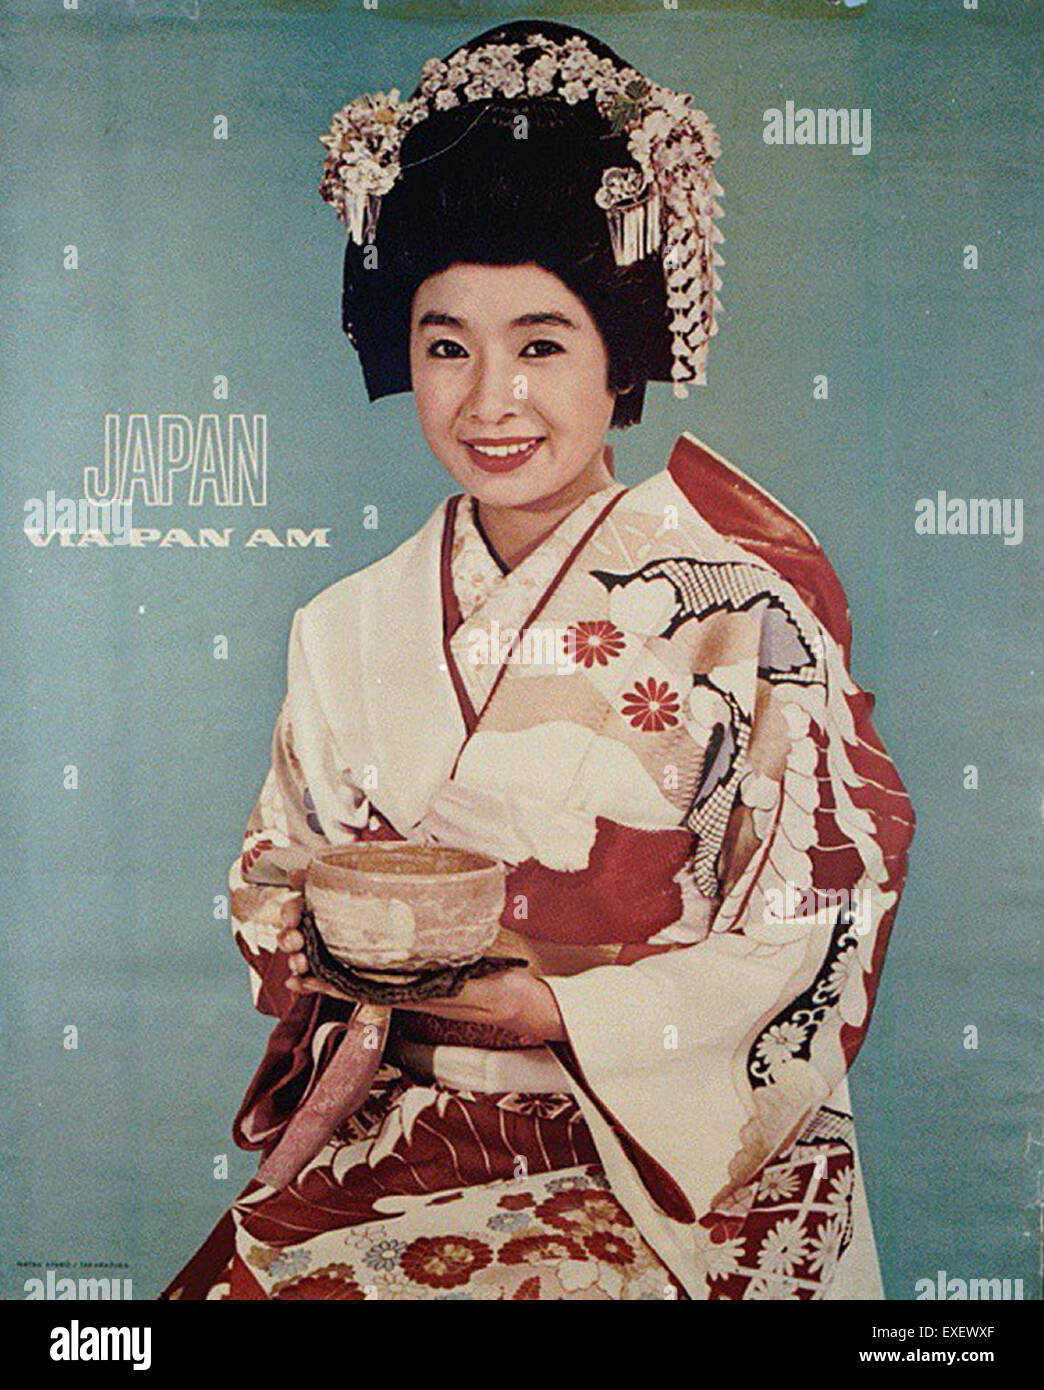 PanAm Japan Poster Stock Photo